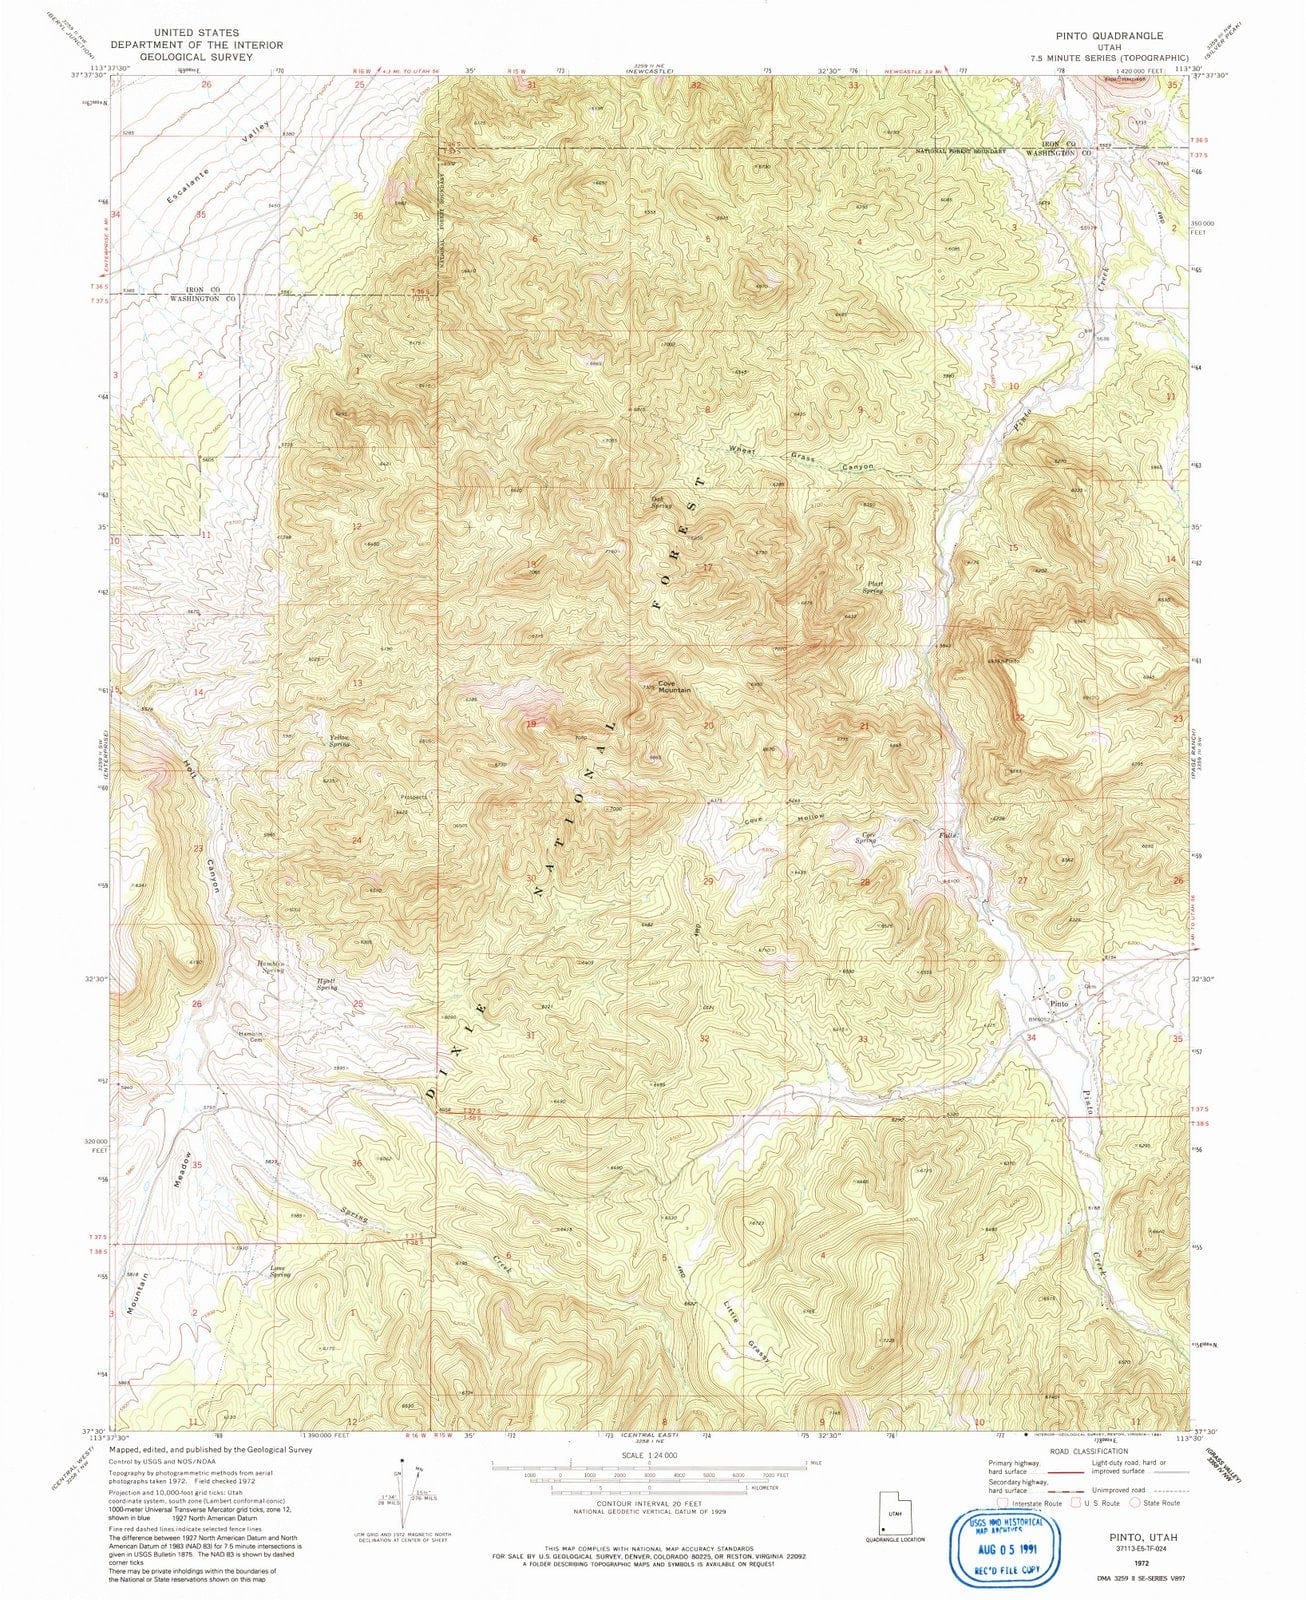 1972 Pinto, UT - Utah - USGS Topographic Map